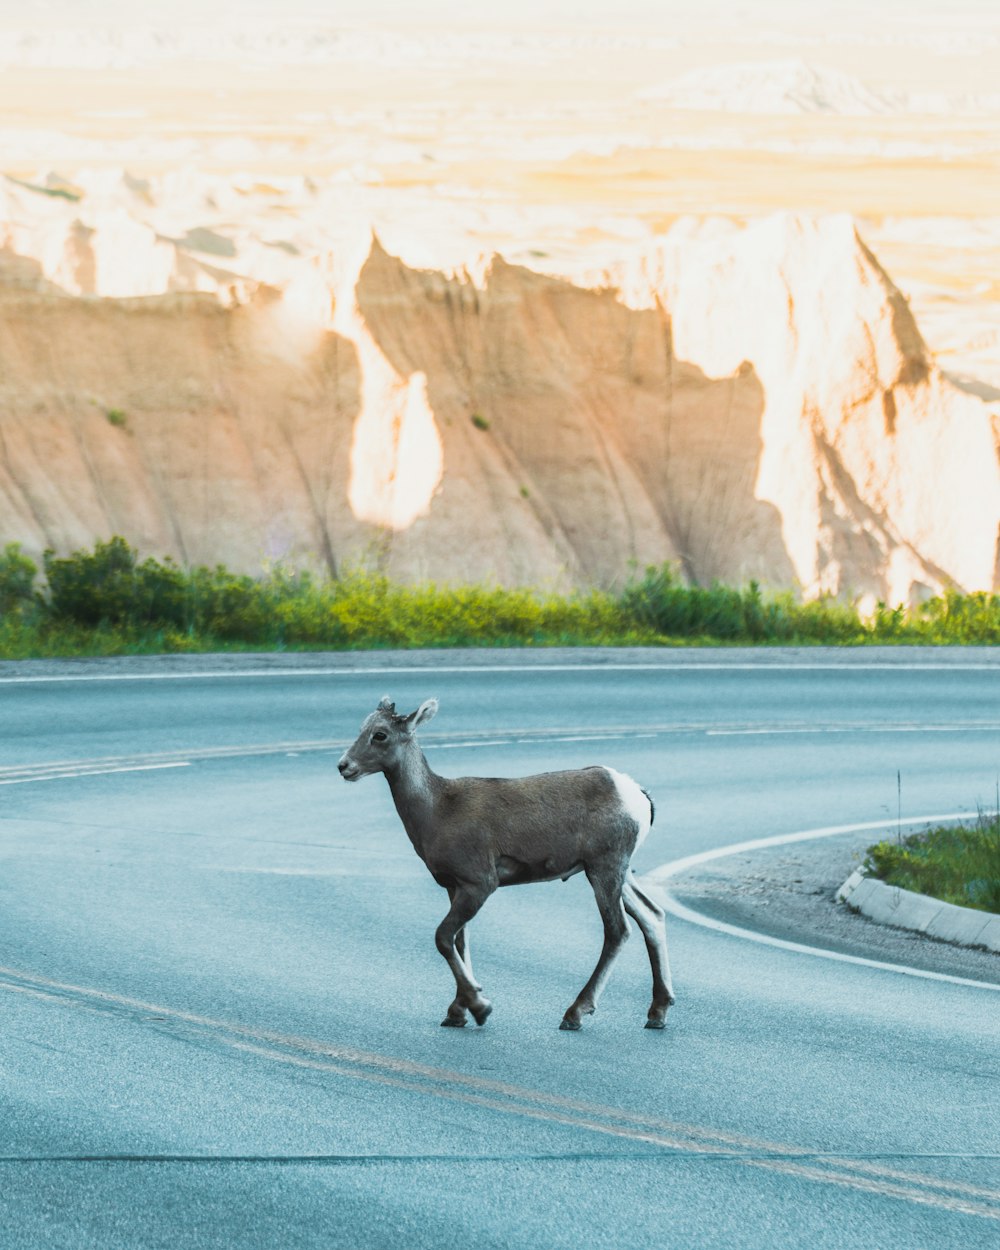 a goat walking across a road near a cliff